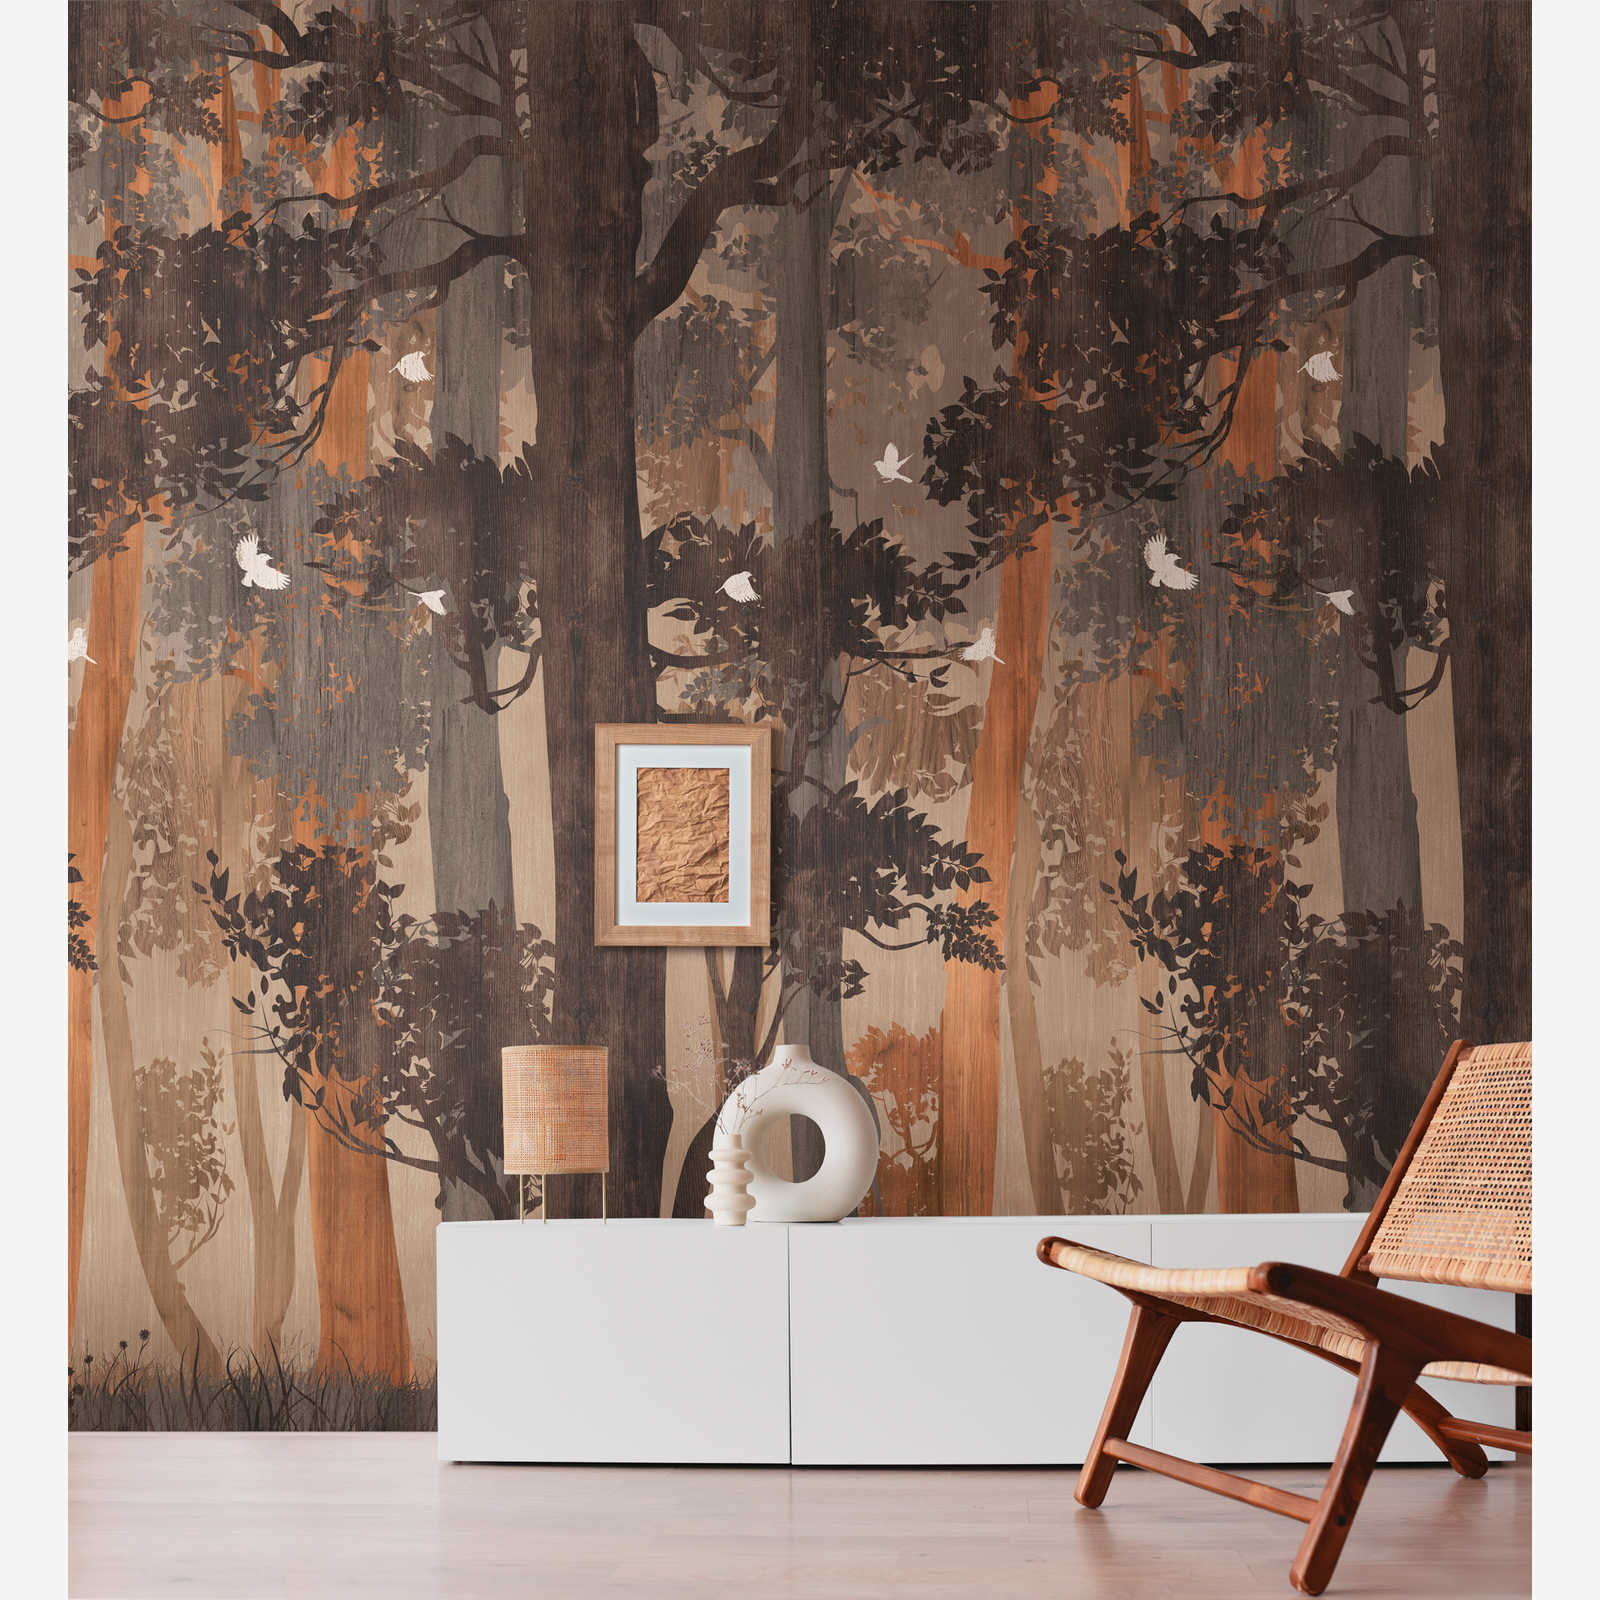         Non-woven wallpaper forest motif in autumn colours with birds - blue, beige, orange
    